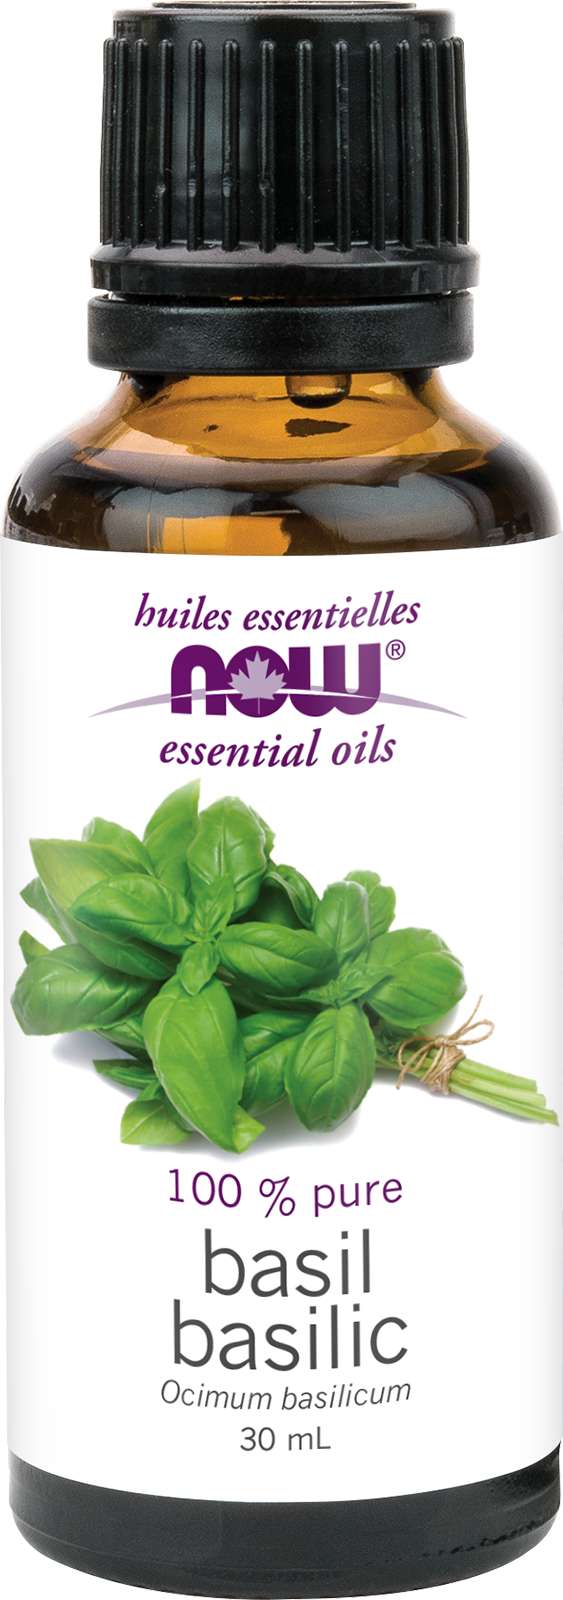 Basil Oil (Ocimum basilicum) 30mL